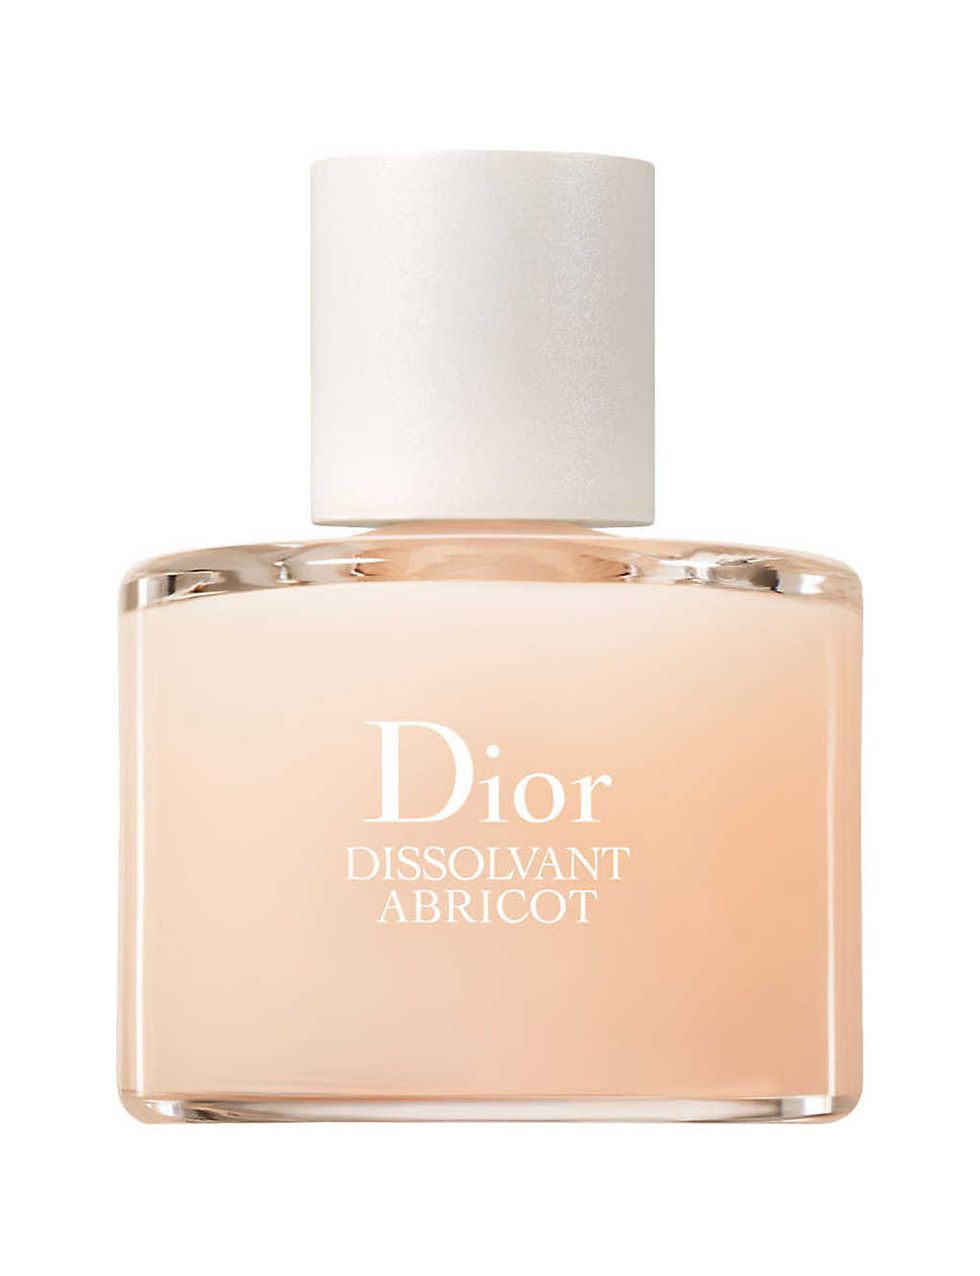 Dior Dissolvant Abricot Gentle Nail Polish Remover